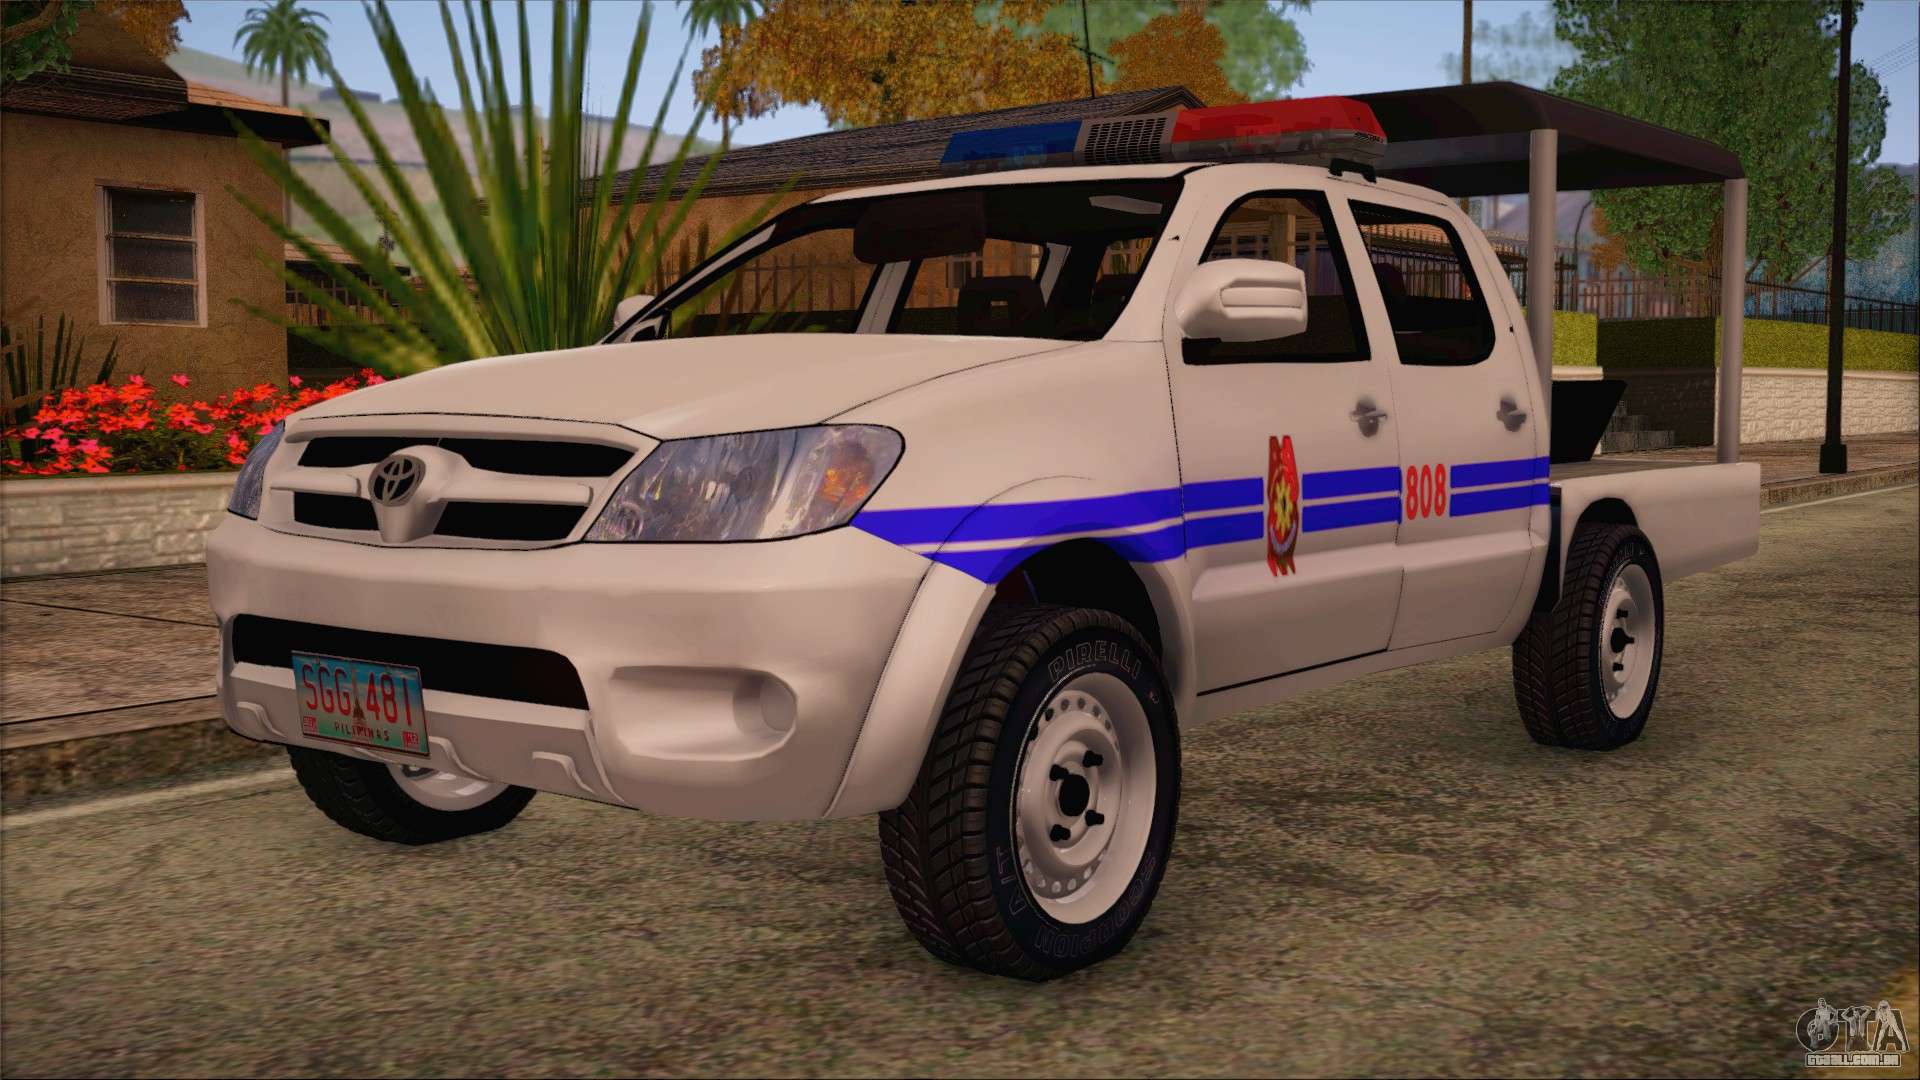 Toyota HiLux Philippine Police Car 2010 para GTA San Andreas